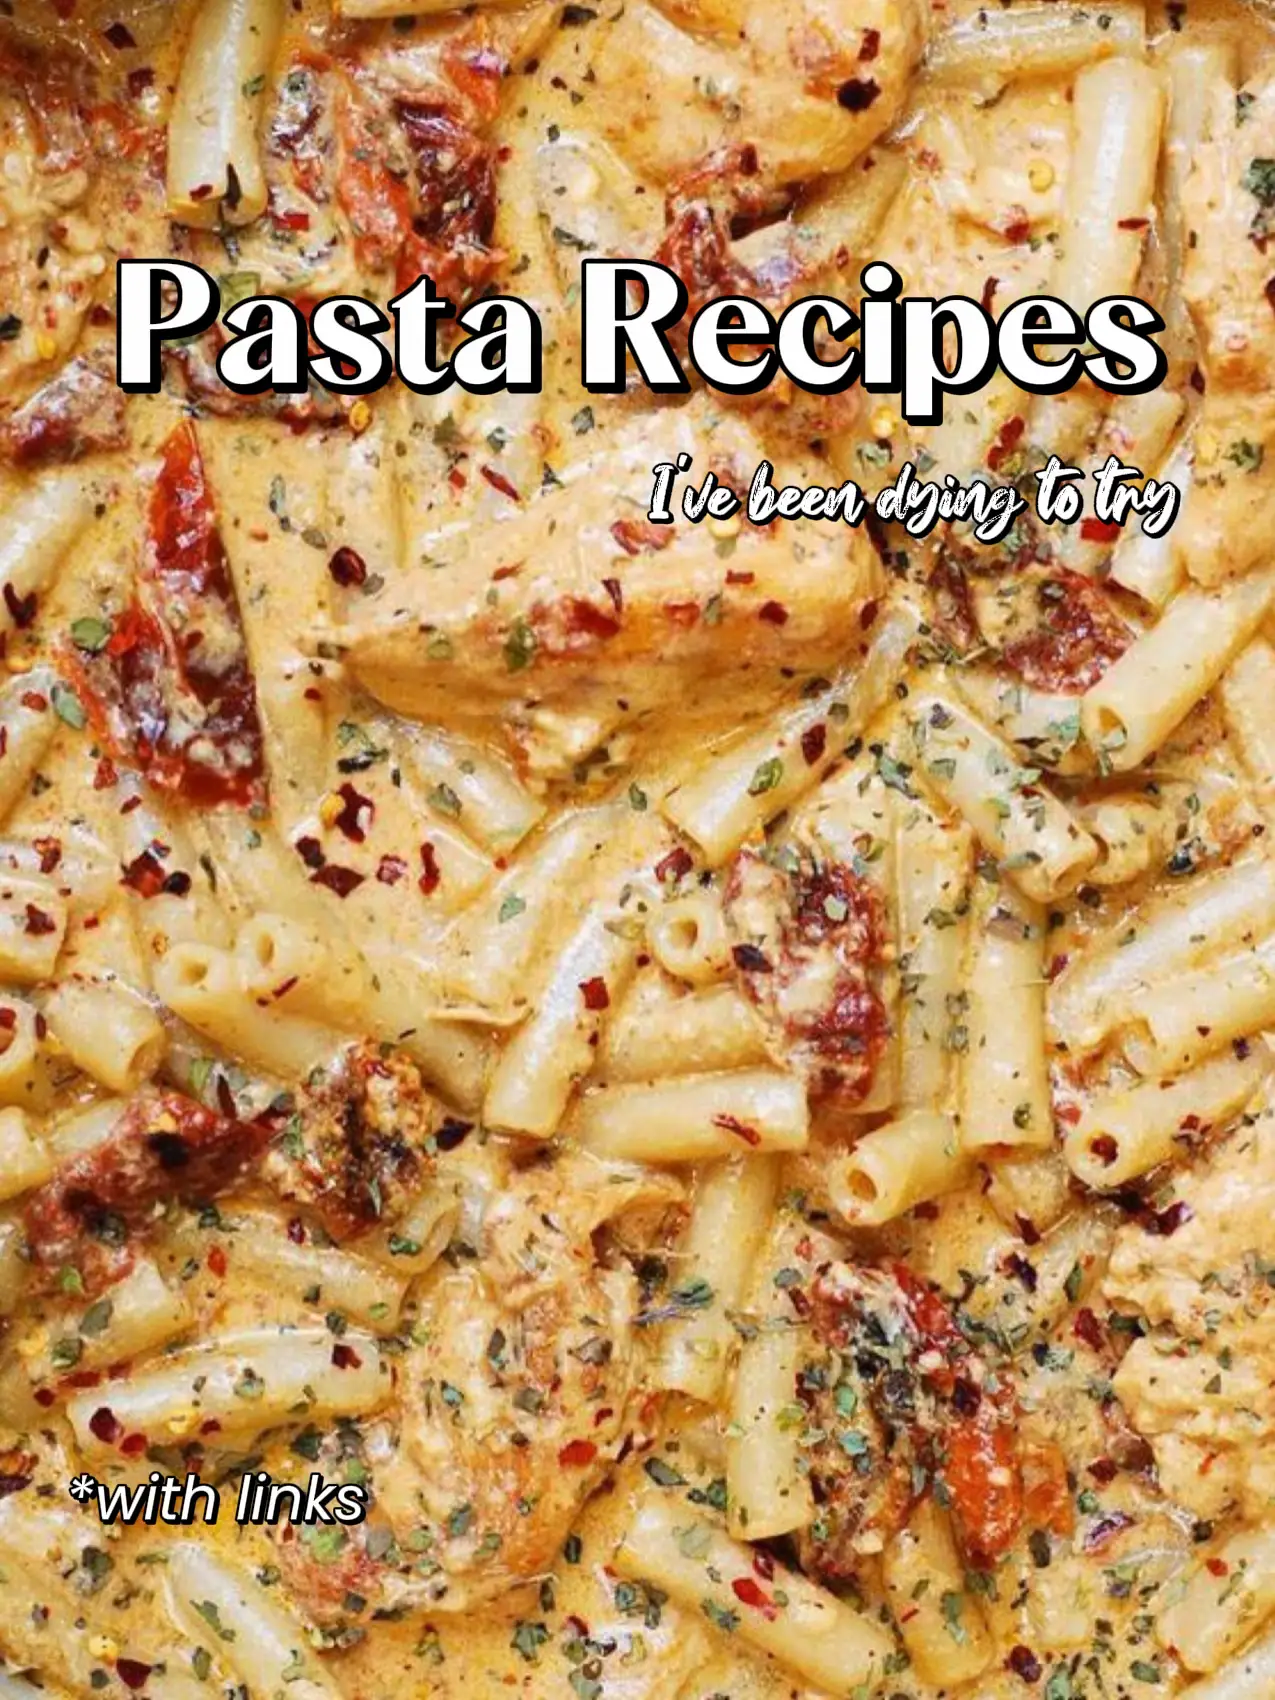 Mueller's Lasagna Recipe Secret: The Perfect Comfort Food - Blend